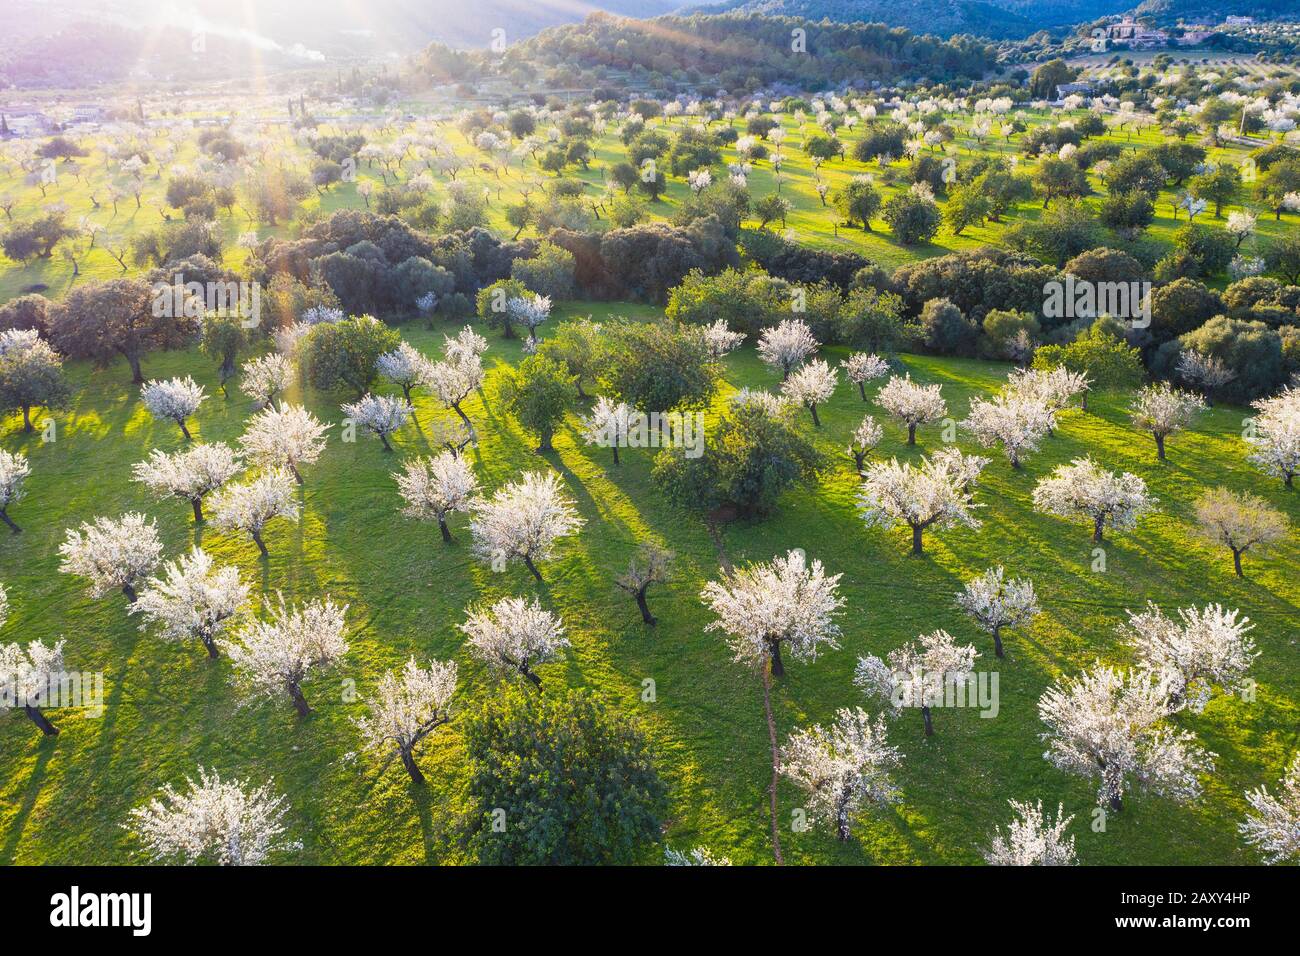 Almond blossom, flowering almond trees, almond plantation near Bunyola, aerial view, Majorca, Balearic Islands, Spain Stock Photo